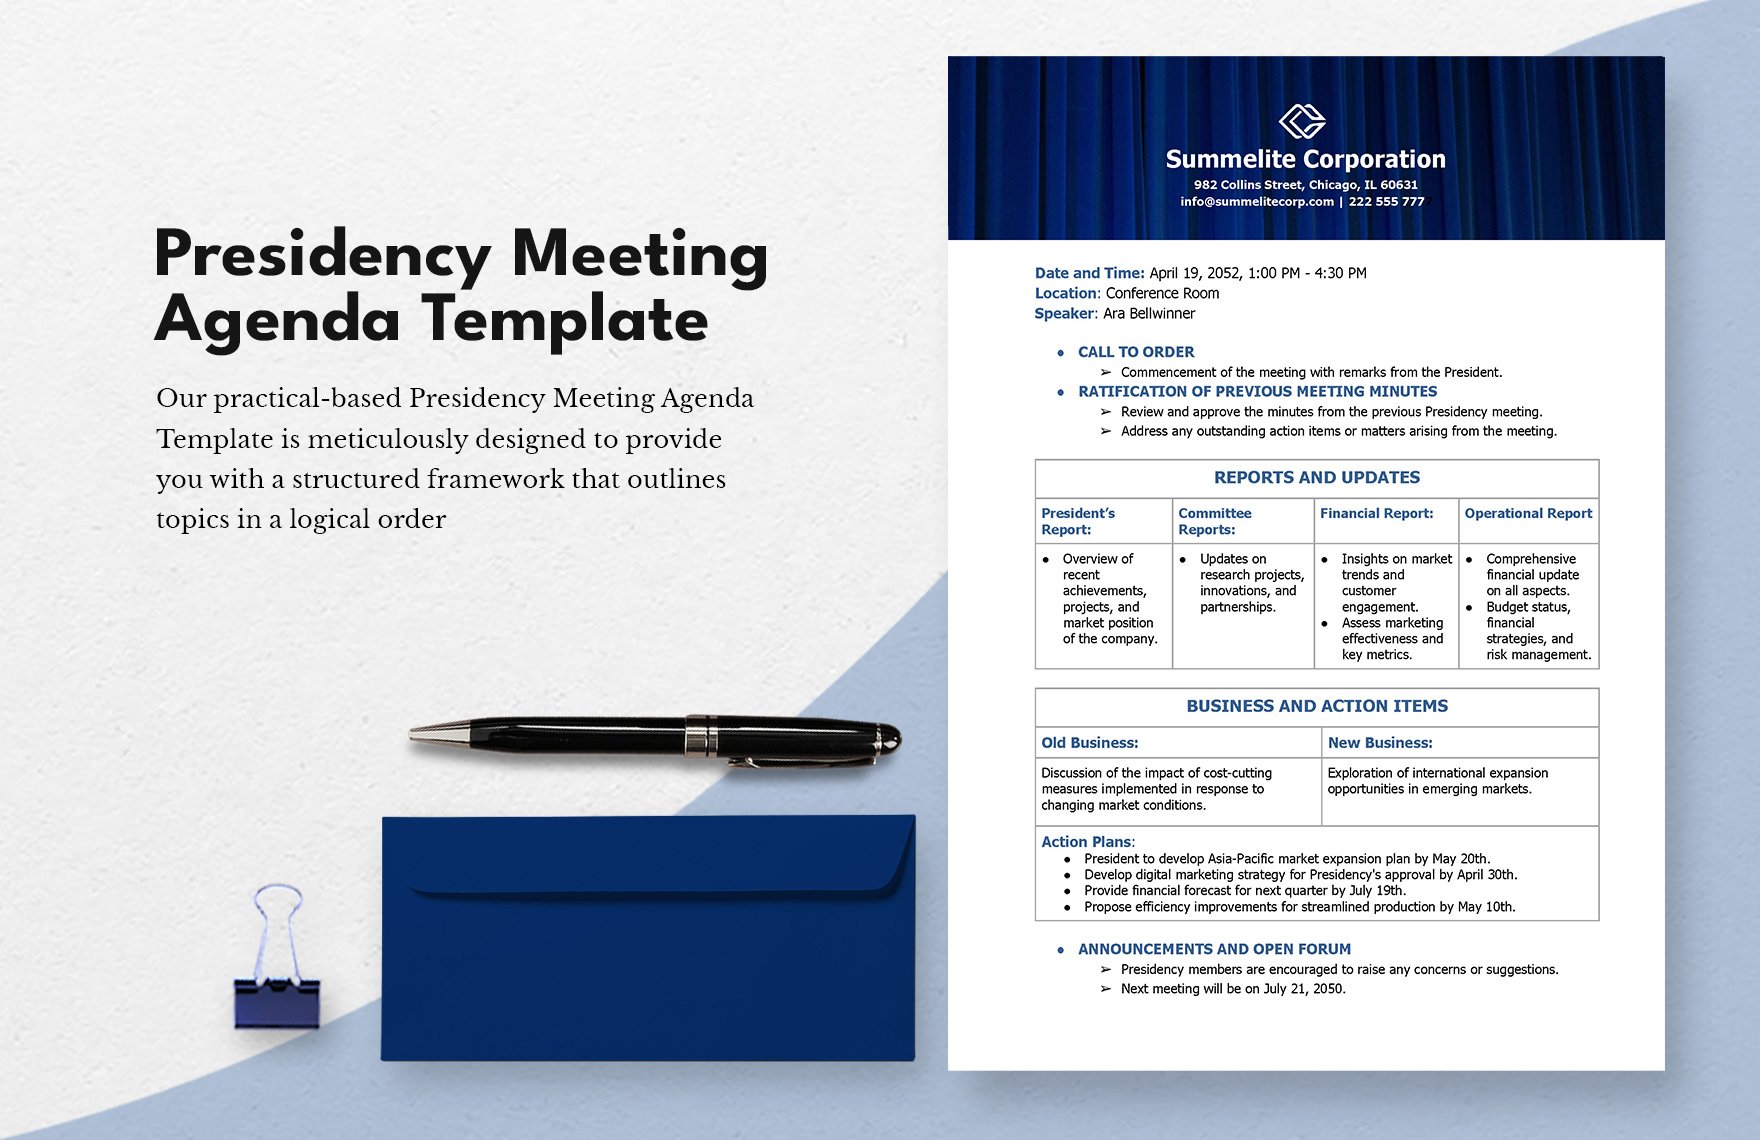 Presidency Meeting Agenda Template in Word, Google Docs, PDF, Apple Pages